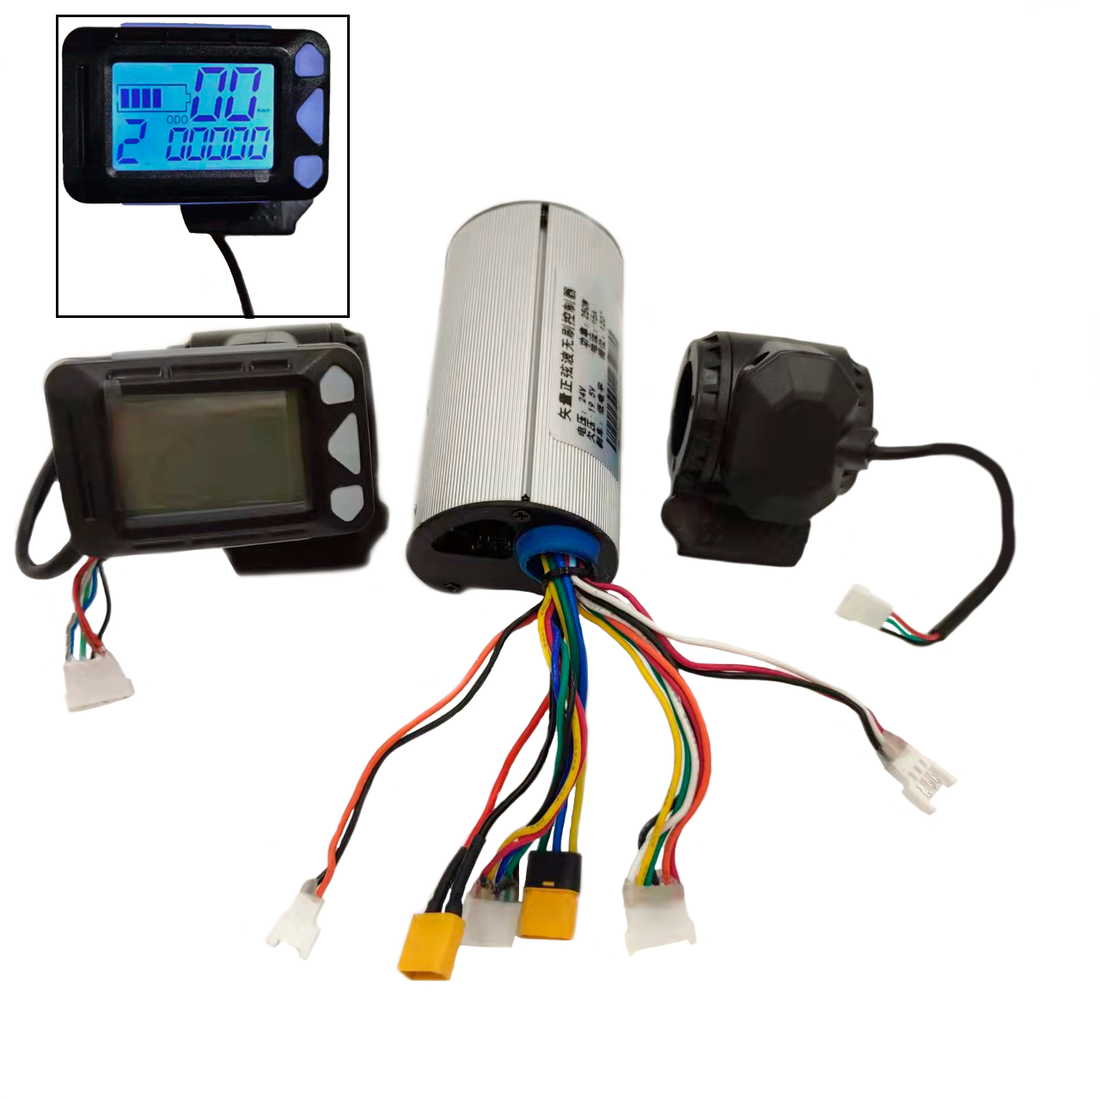 24V 250W BLDC controller kit + LCD display with accelerator + brake